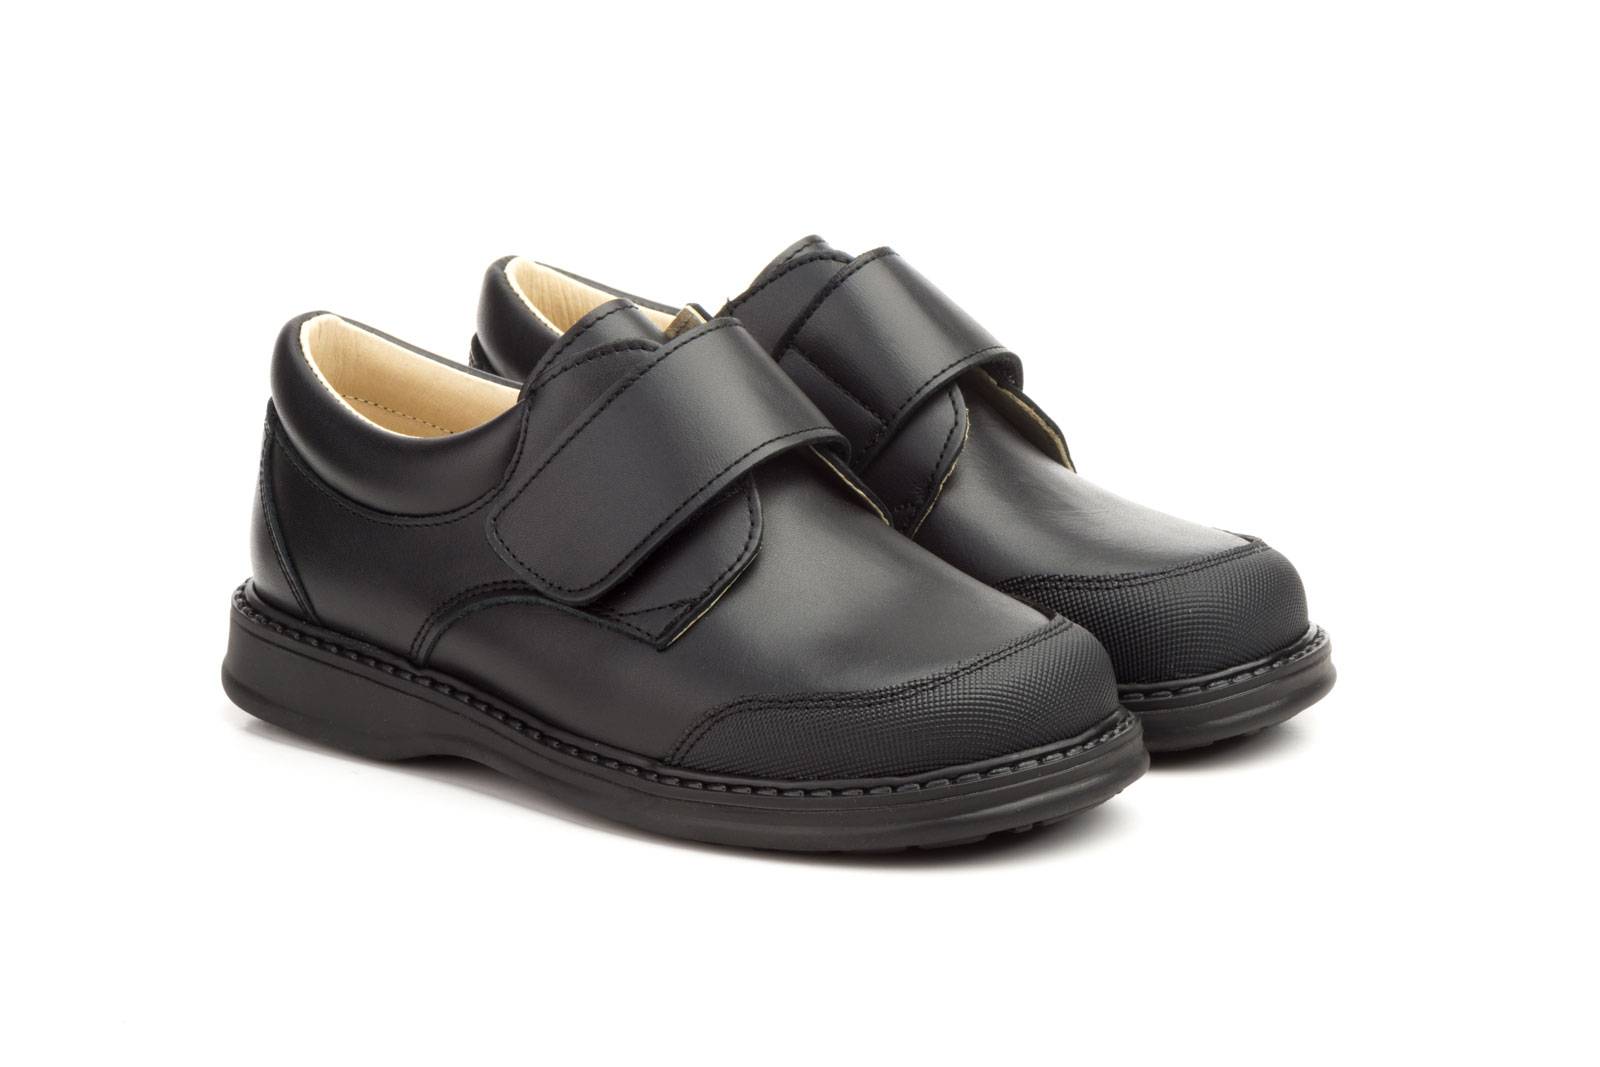 Shoes Schoolboy Child Black Leather 